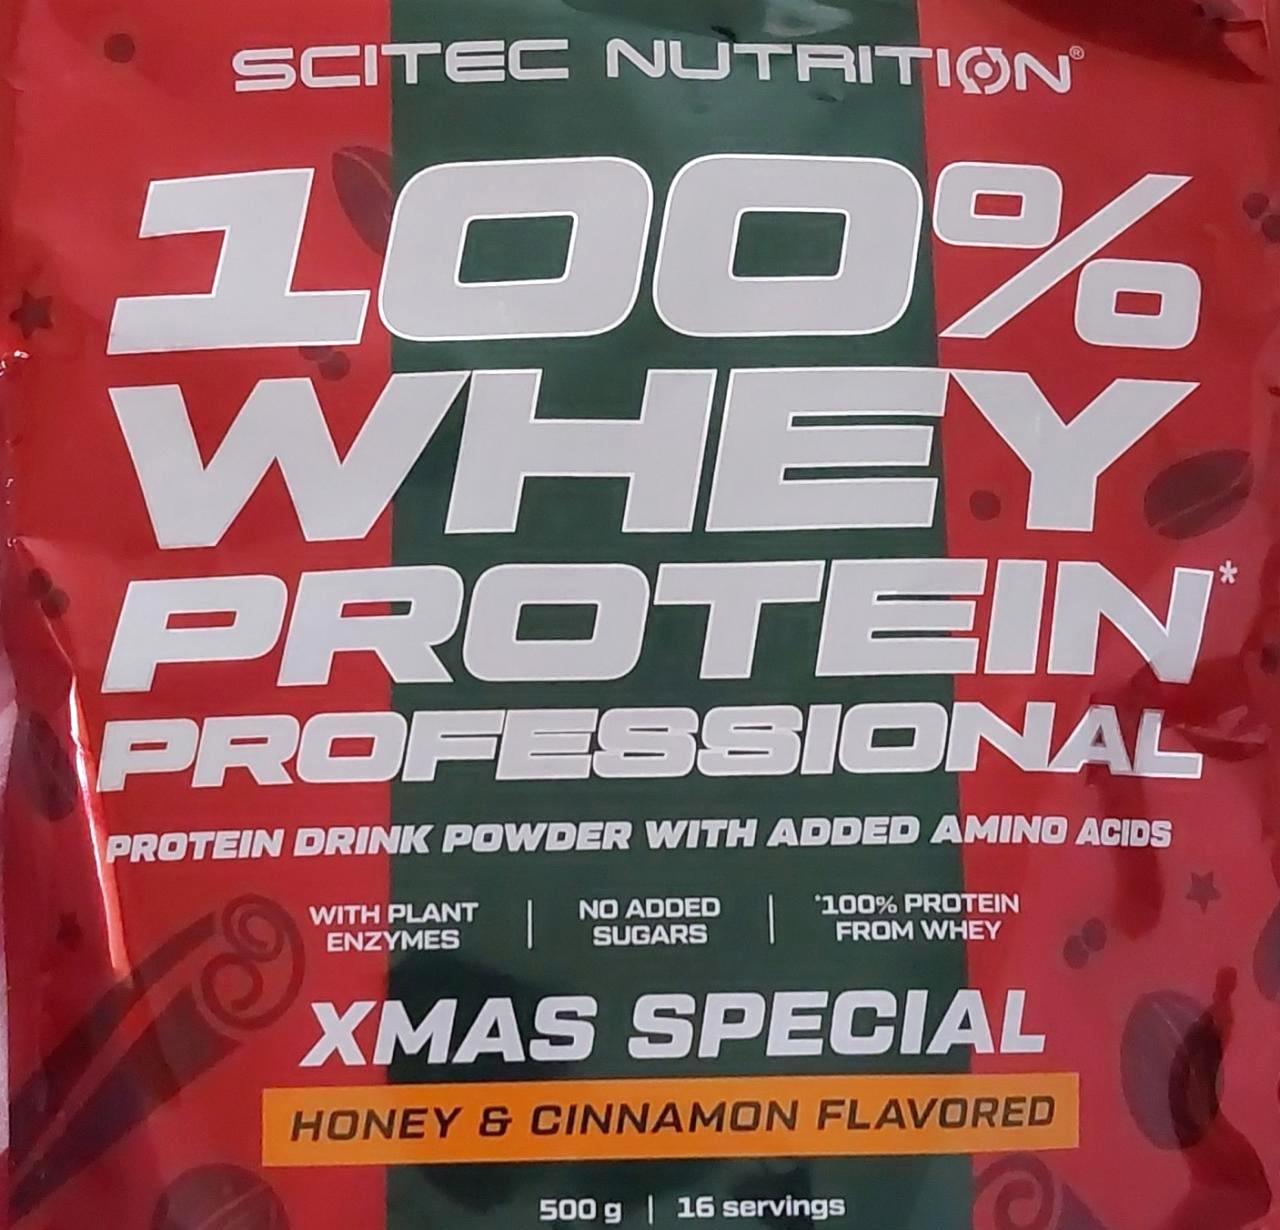 Képek - 100% Whey protein professional Xmas special Honey & cinnamon flavoured Scitec Nutrition